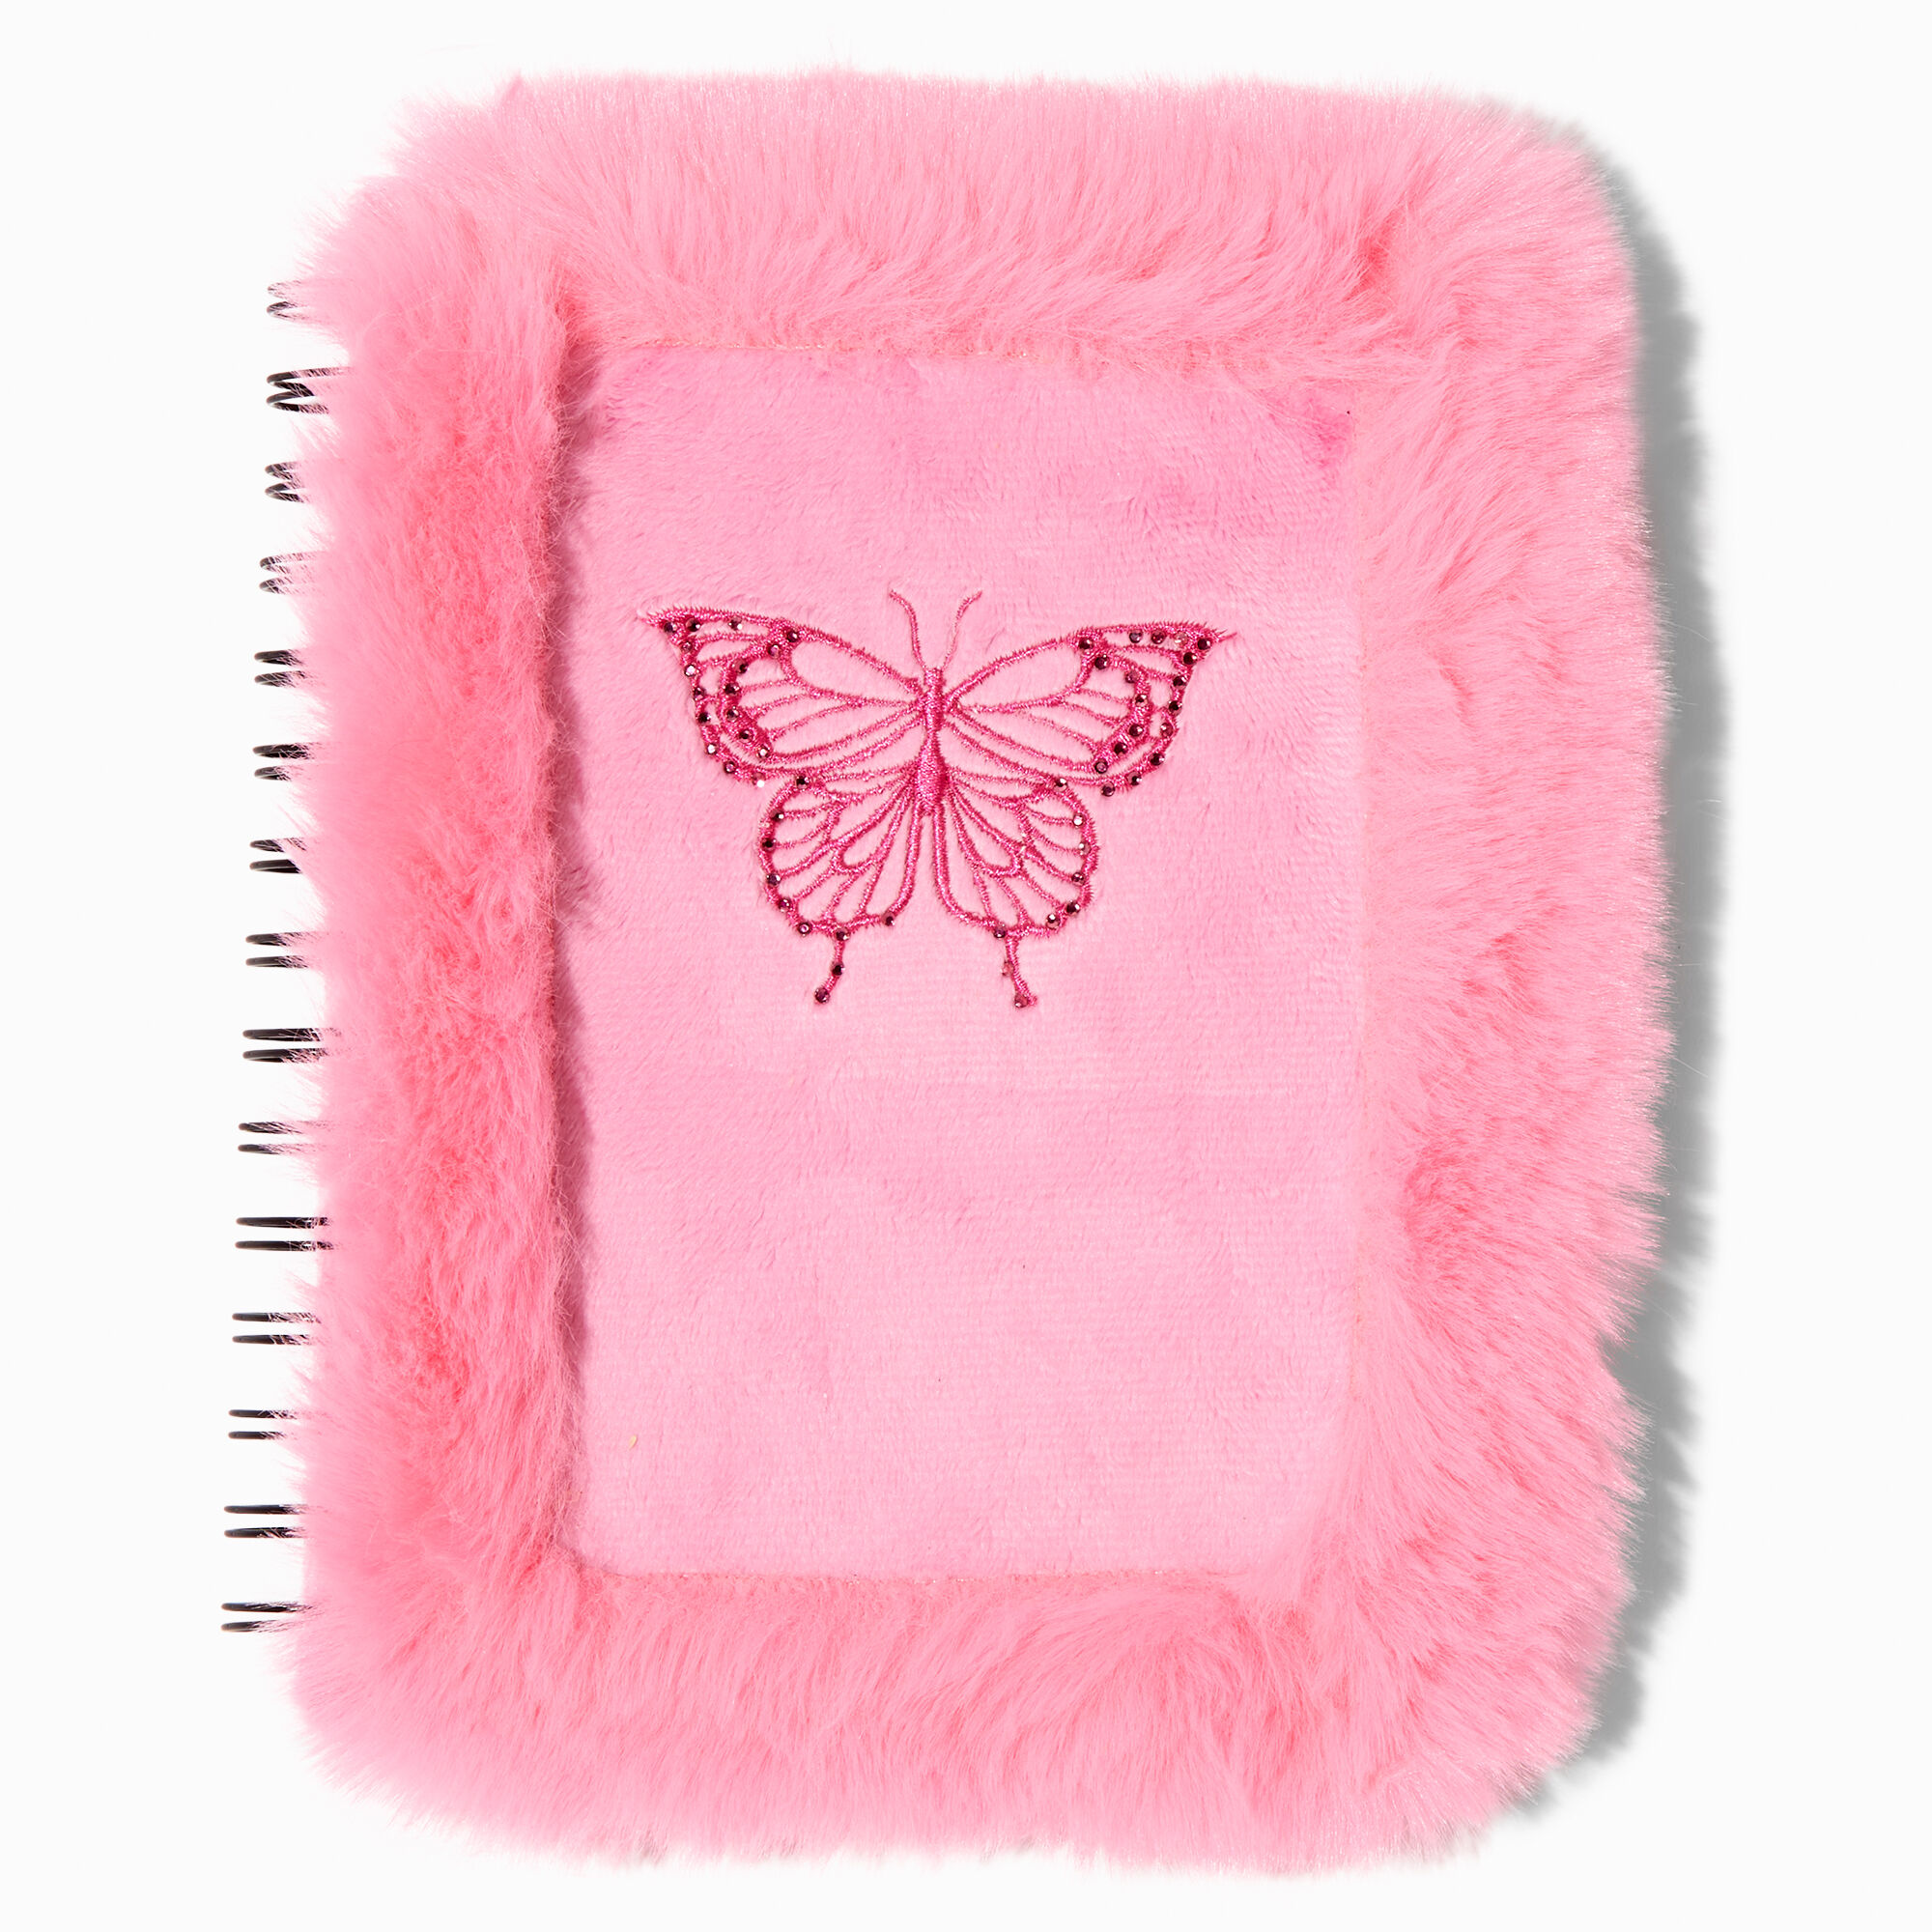 Cat, Cat Notebook, Cat Journal, Cat and Butterfly, Pink Journal